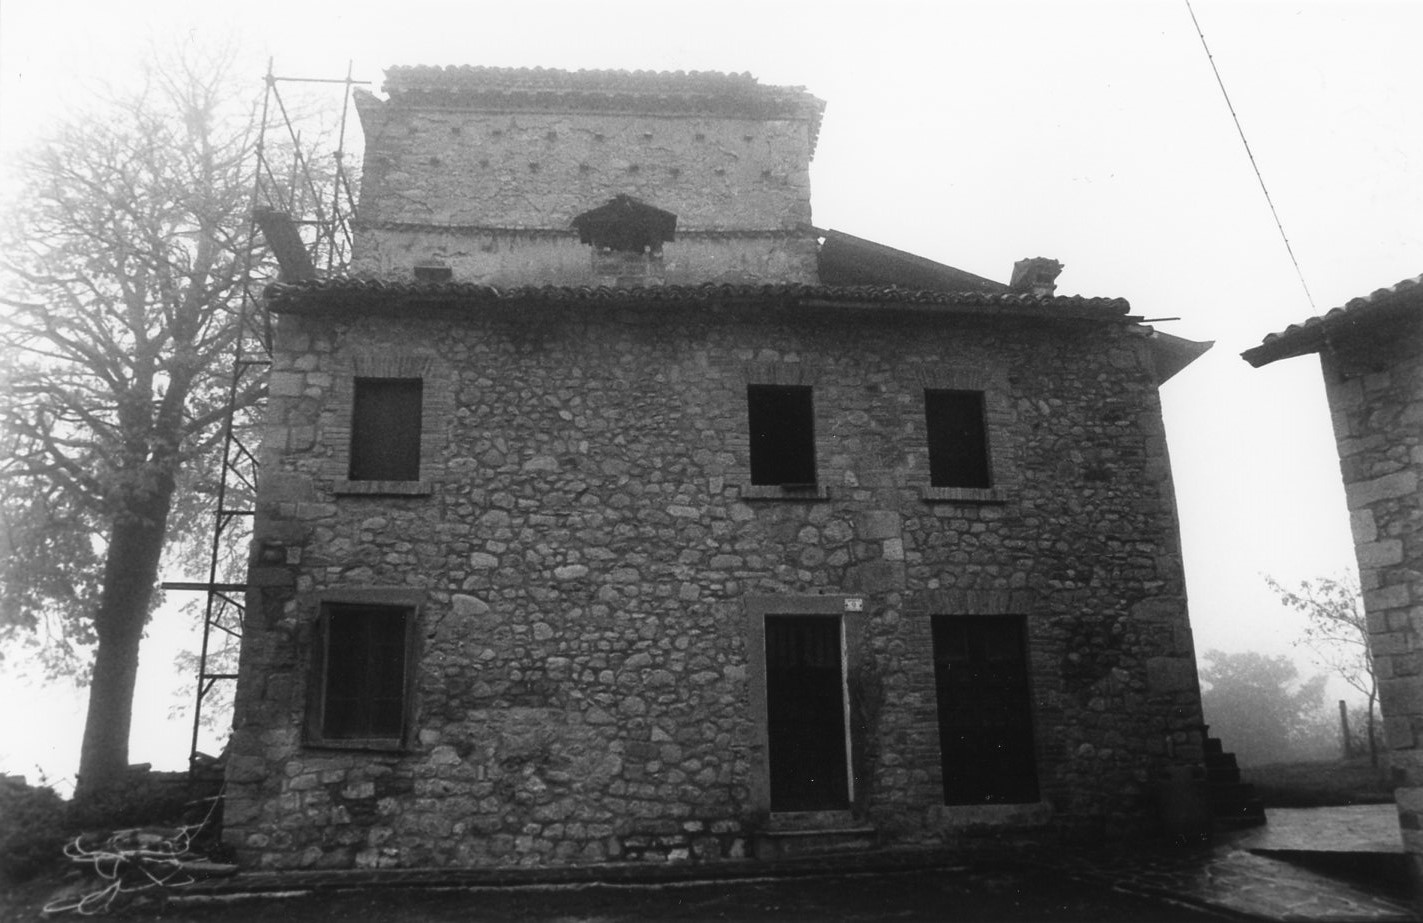 Casa torre Cavandoli (casa-torre, rurale) - Canossa (RE)  (sec. XV)